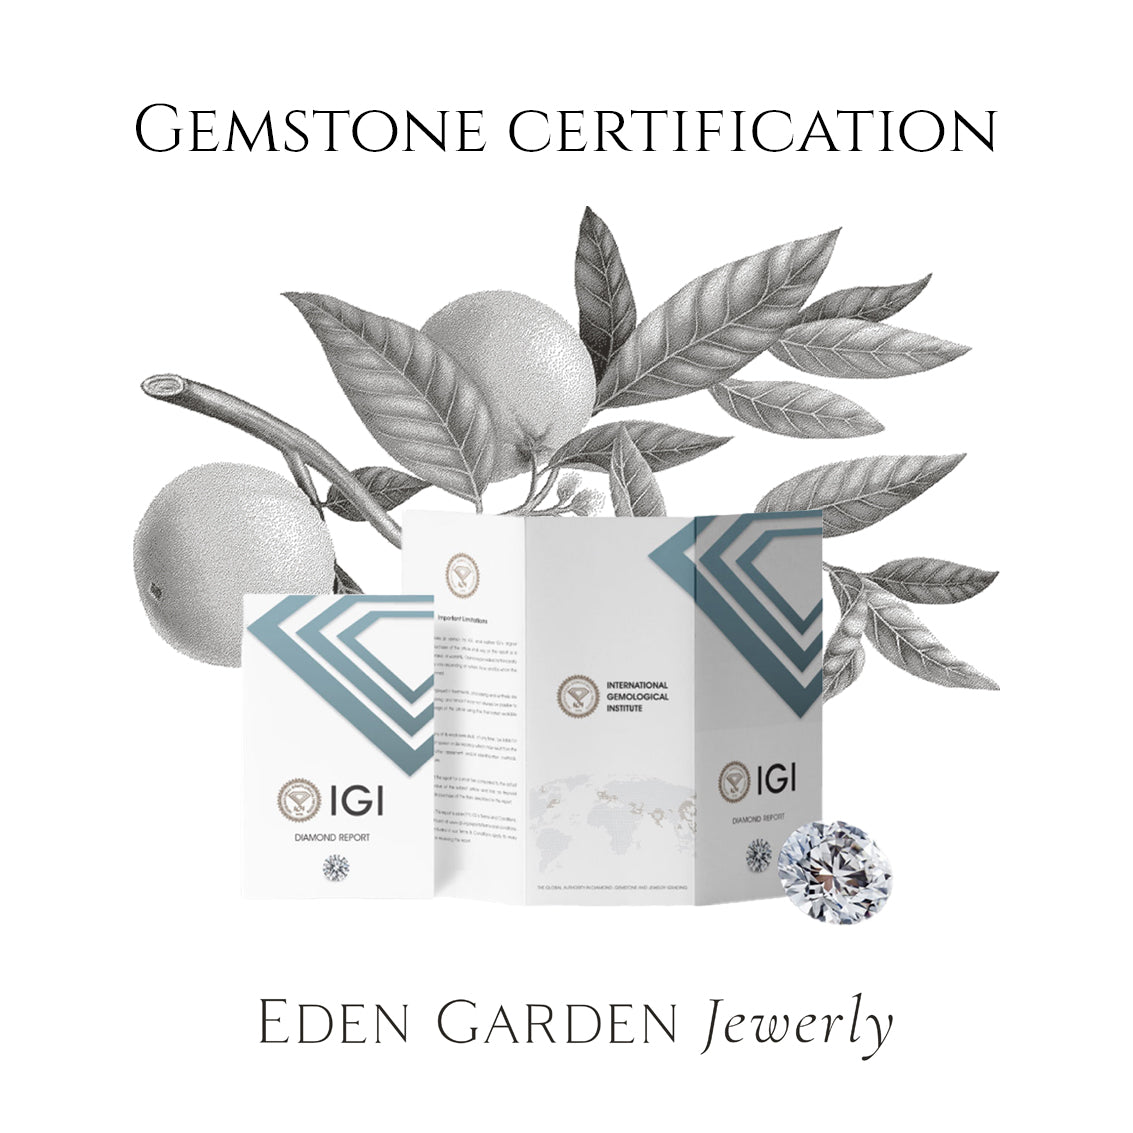 IGI Gemstone Certification: Ensuring Quality and Authenticity - Eden Garden Jewelry™